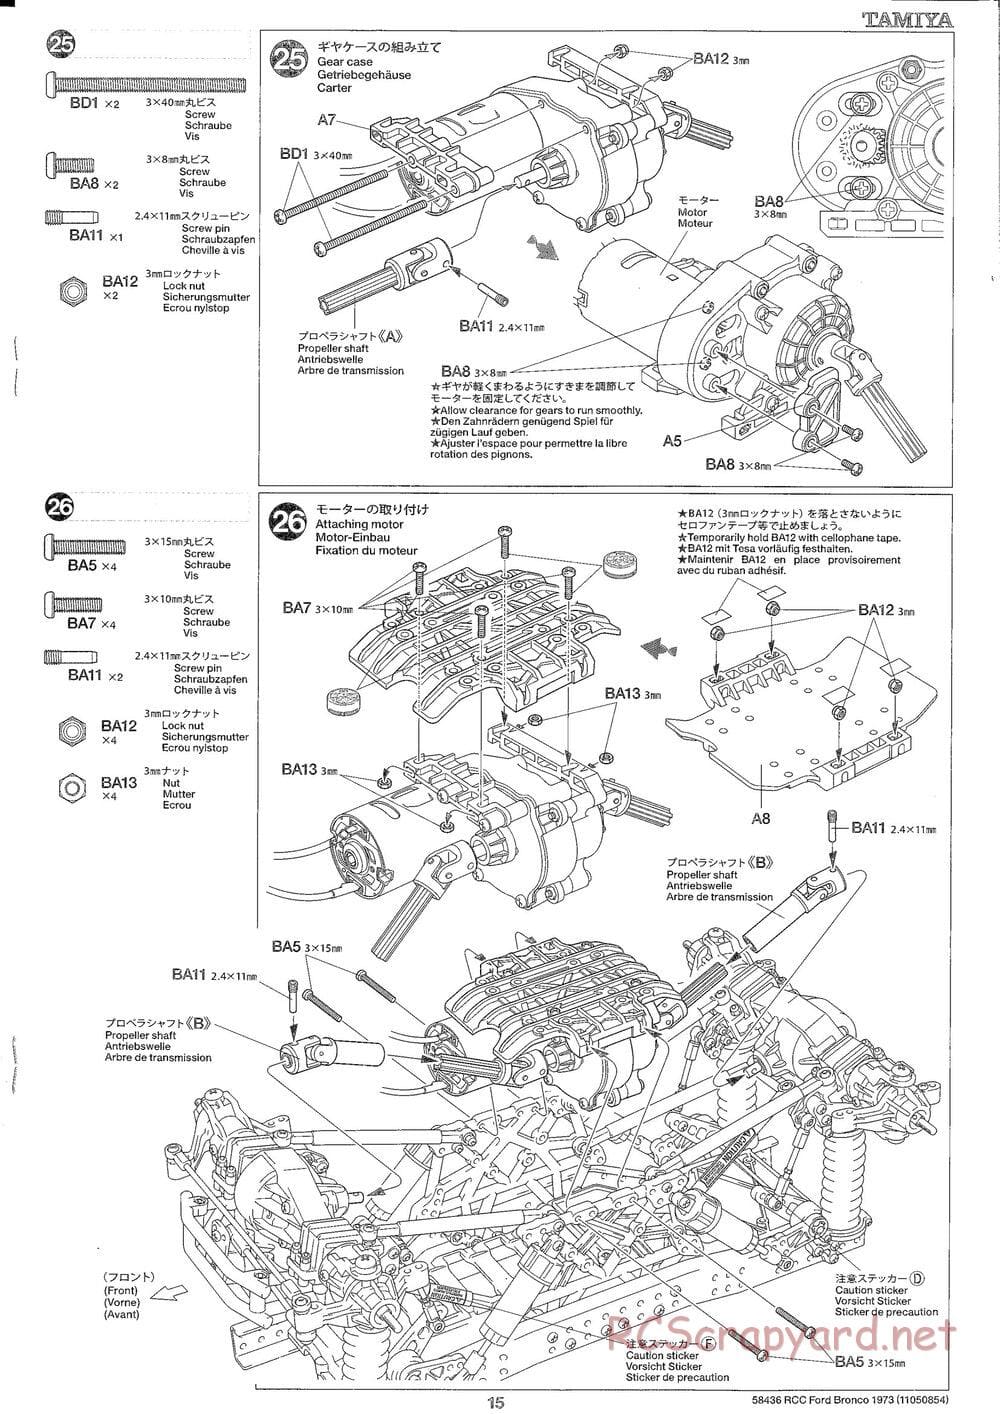 Tamiya - Ford Bronco 1973 - CR-01 Chassis - Manual - Page 15